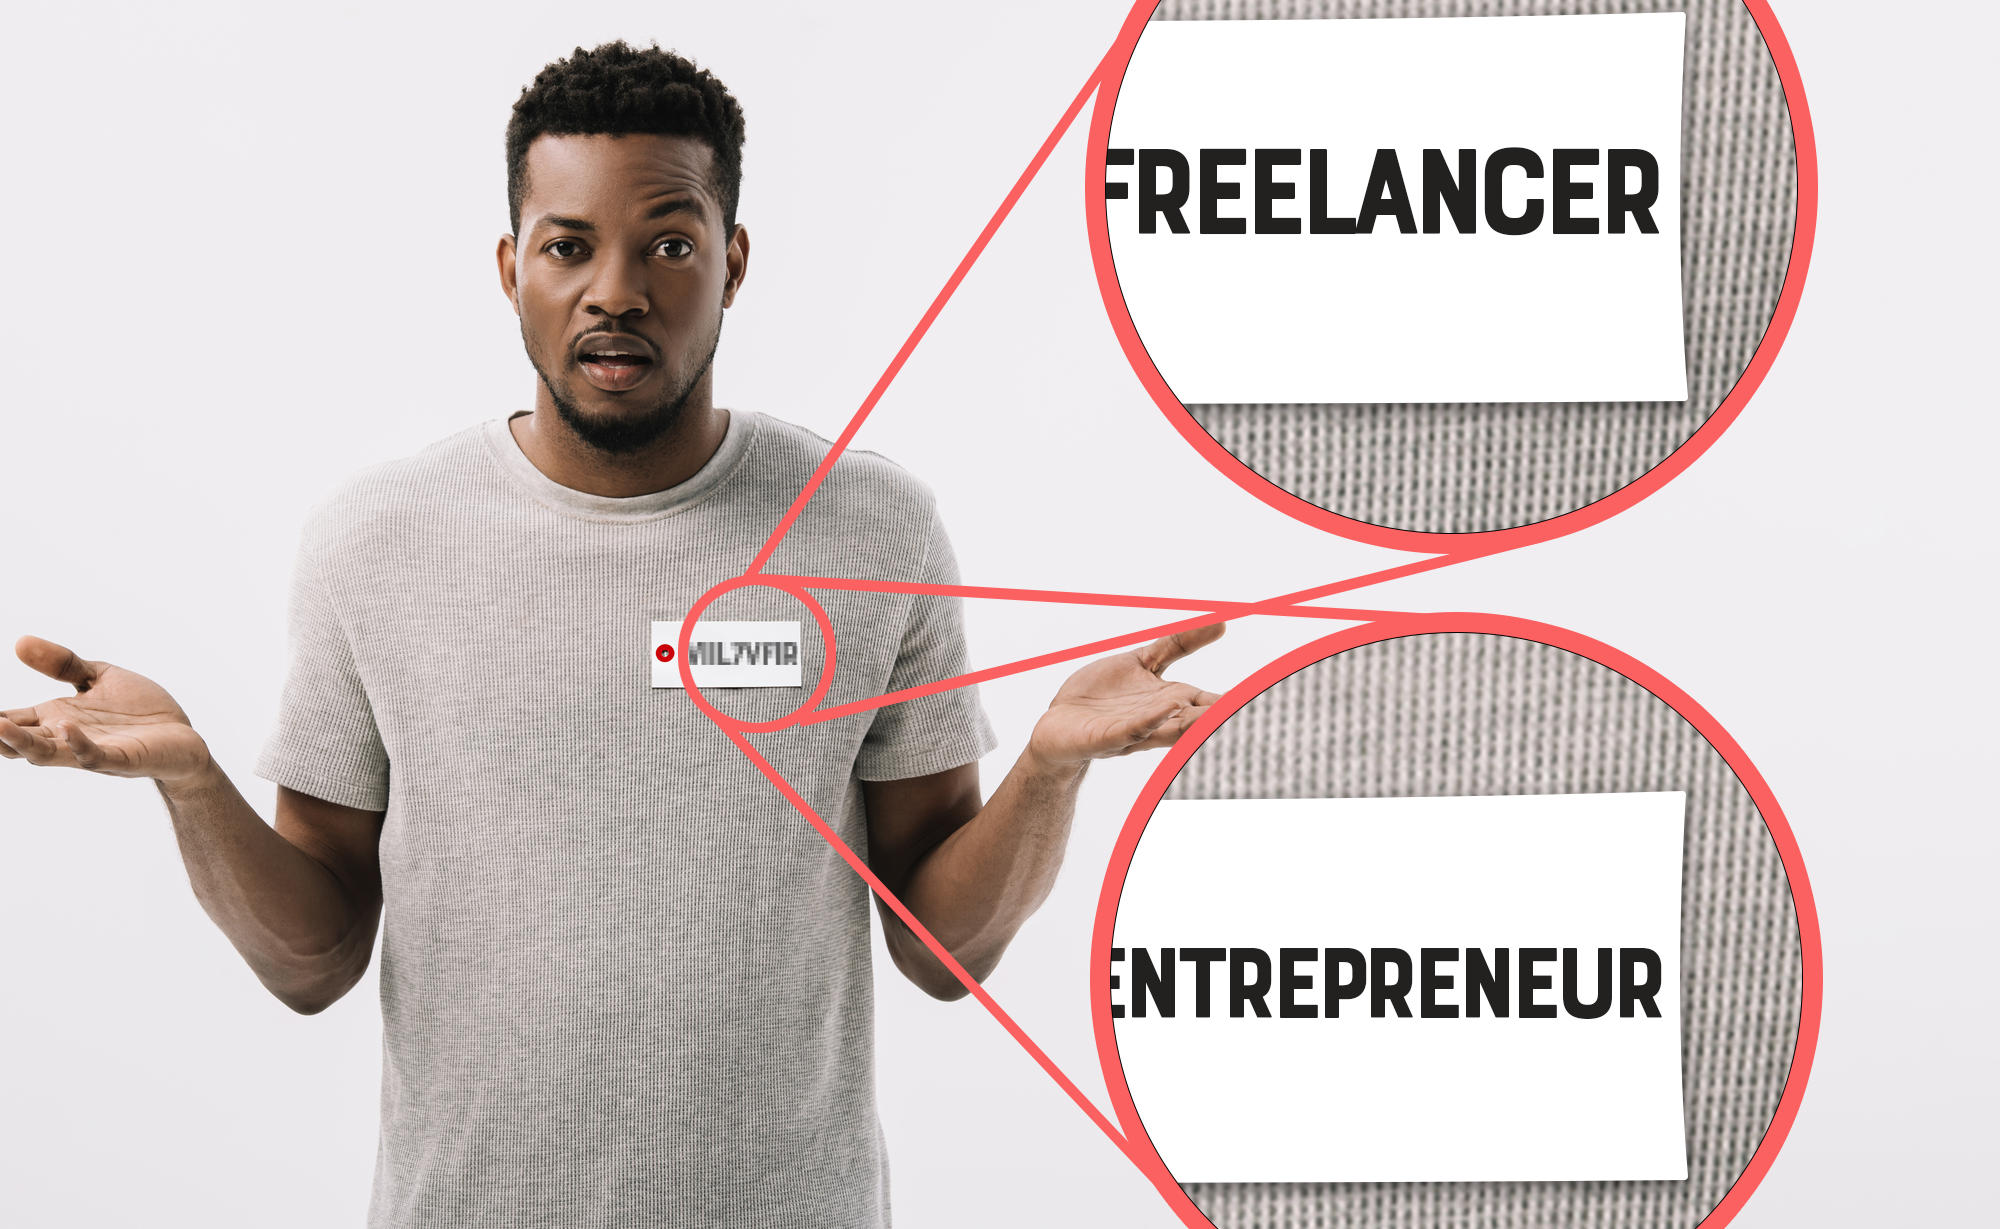 Entrepreneur or Freelancer